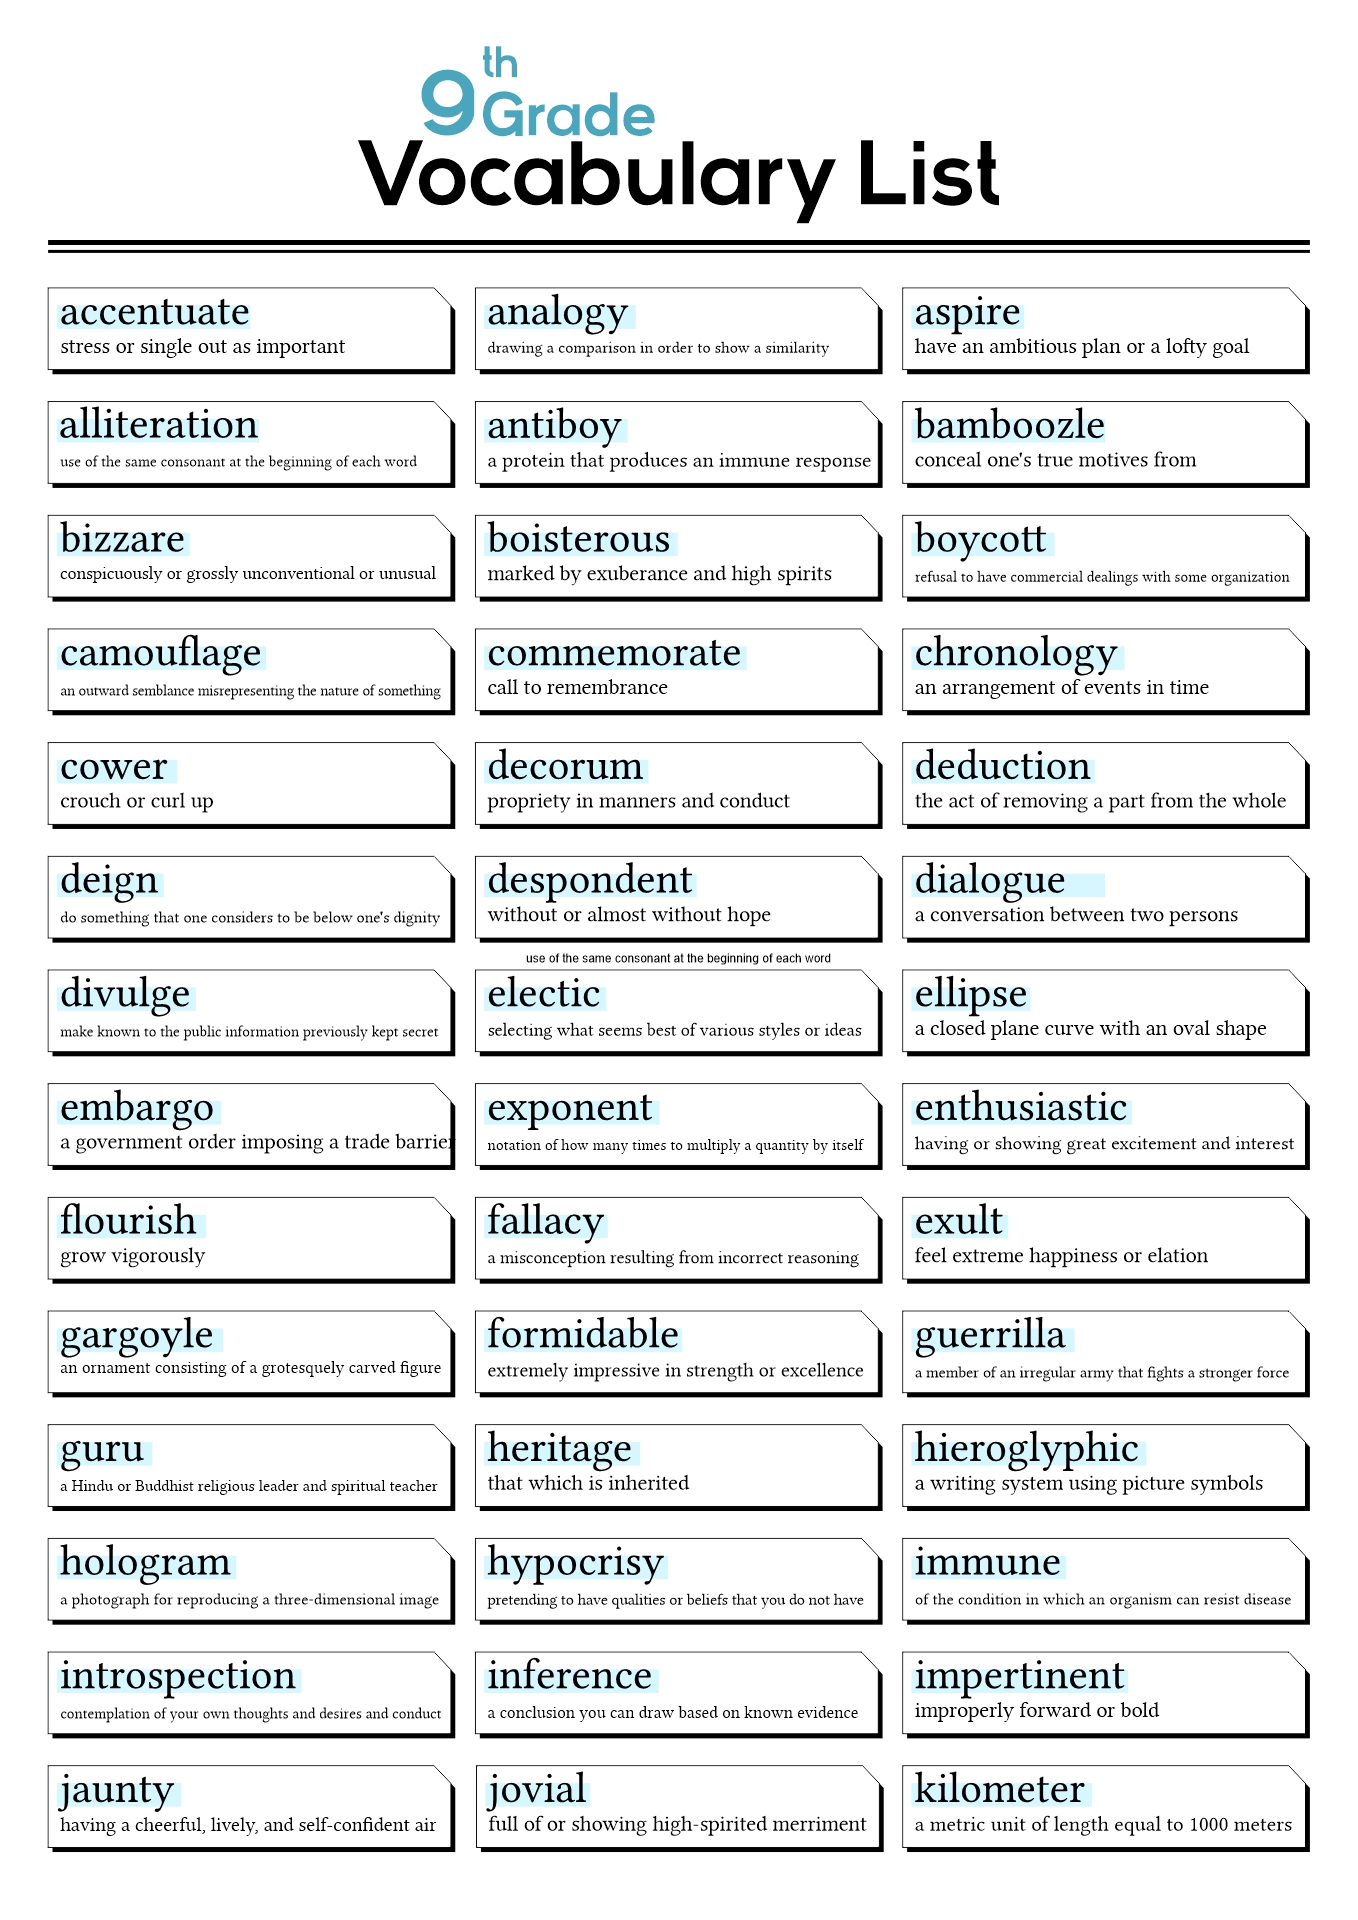 9th Grade Vocabulary Word List Image